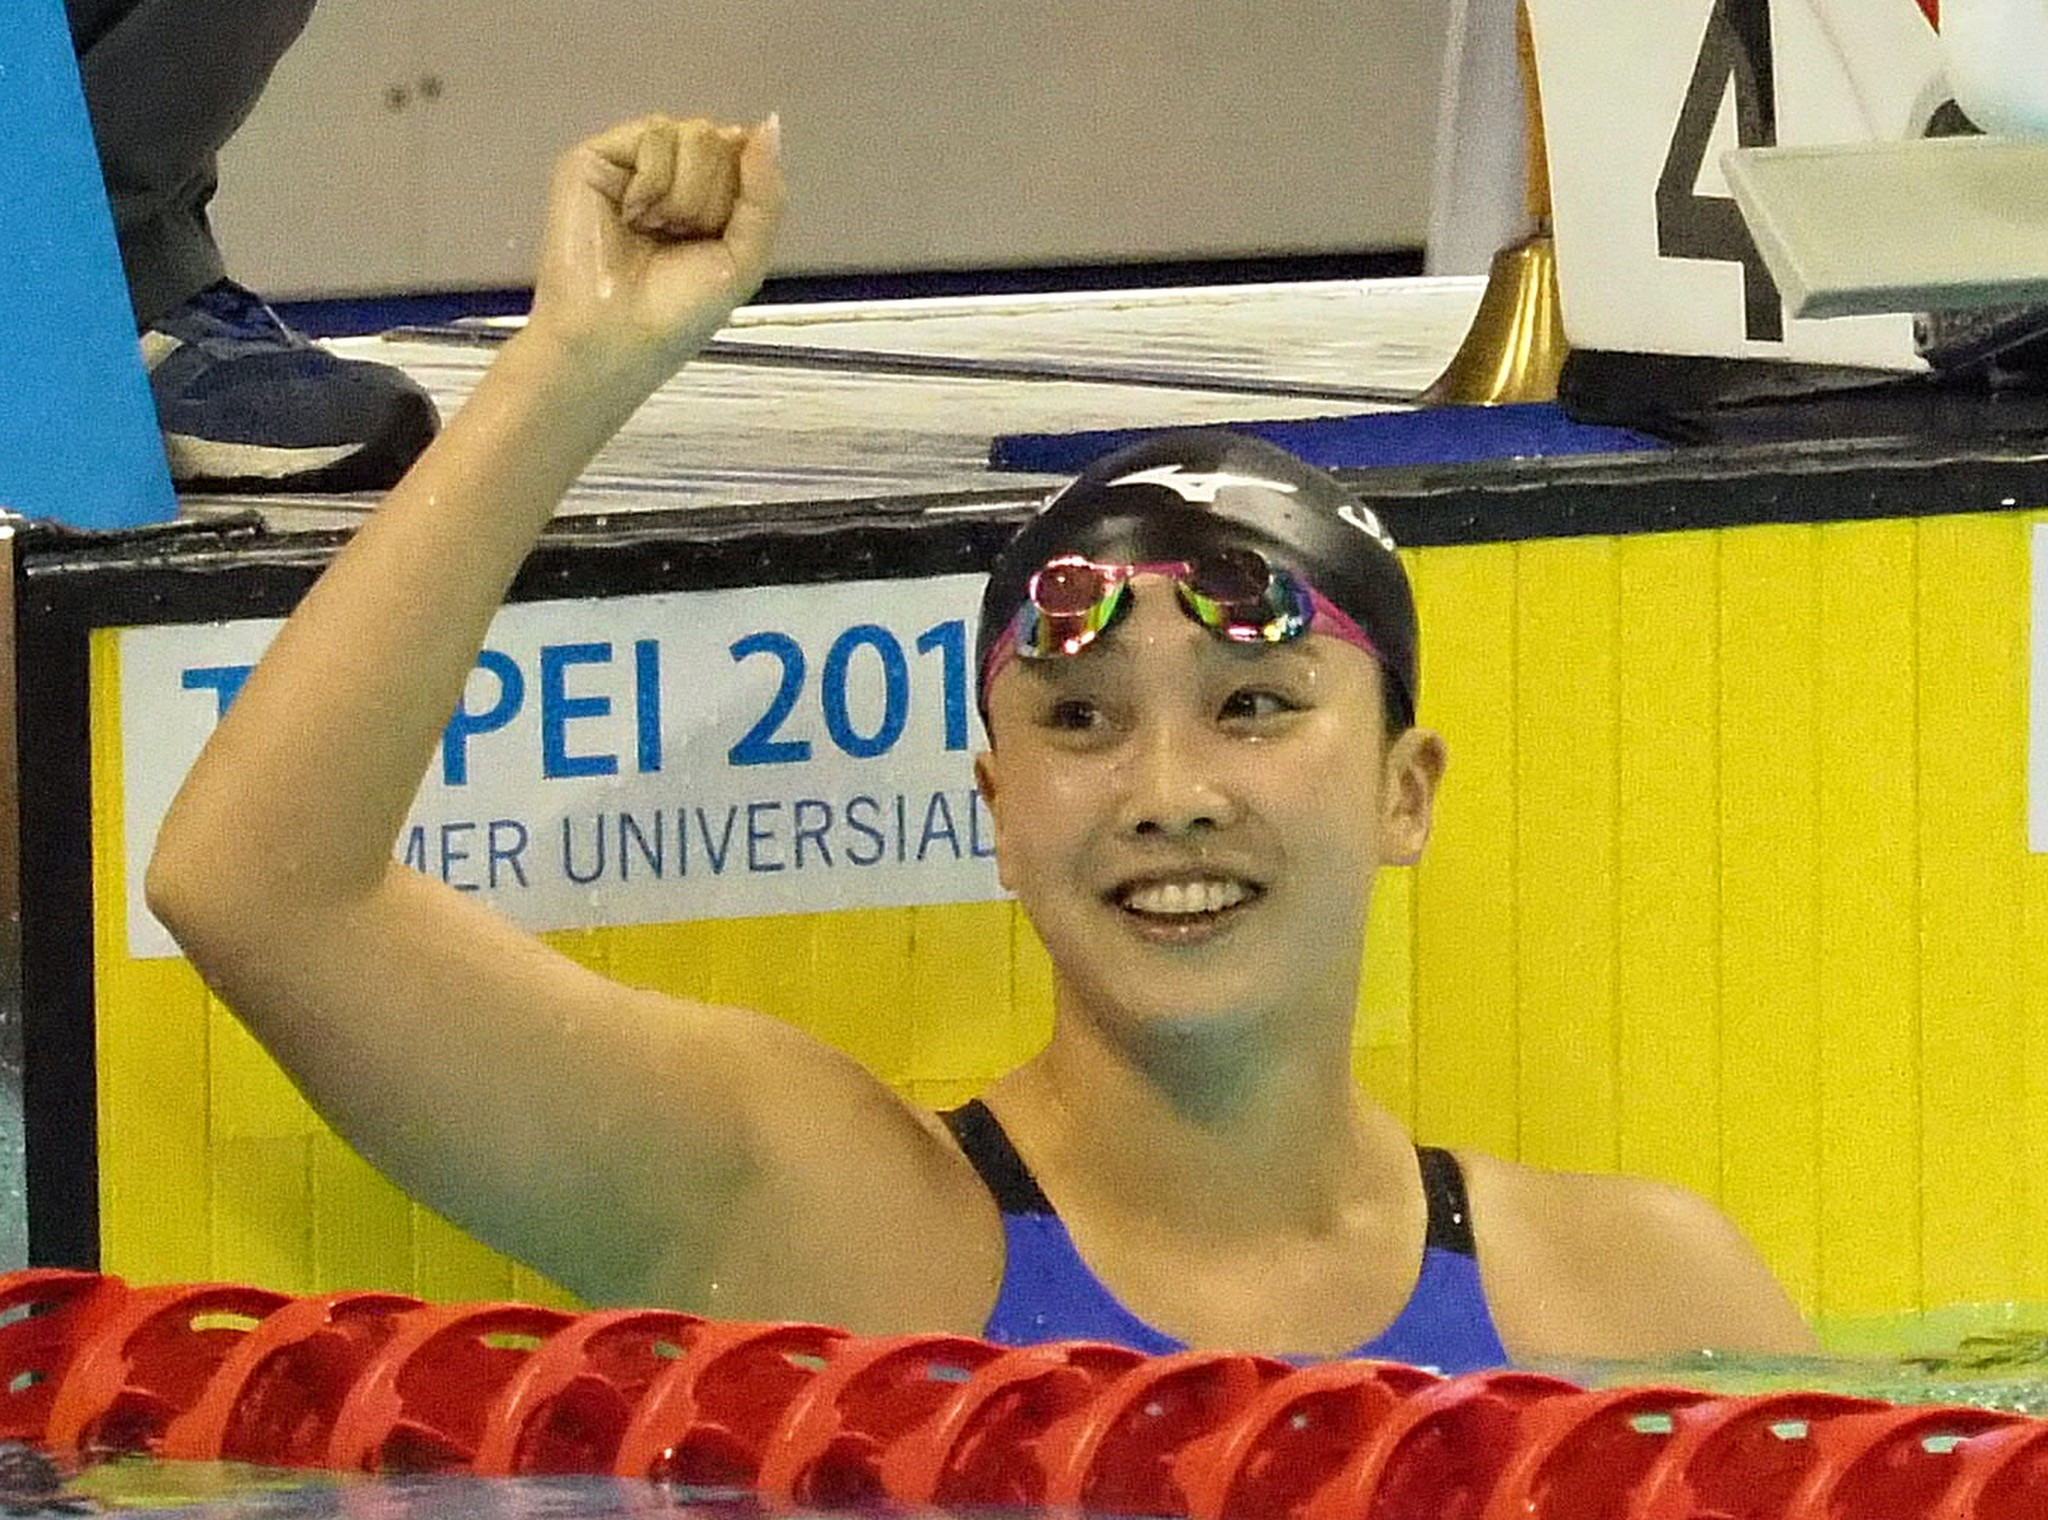 Kanako Watanabe finished fastest in the women's 100m breaststroke ©Taipei 2017